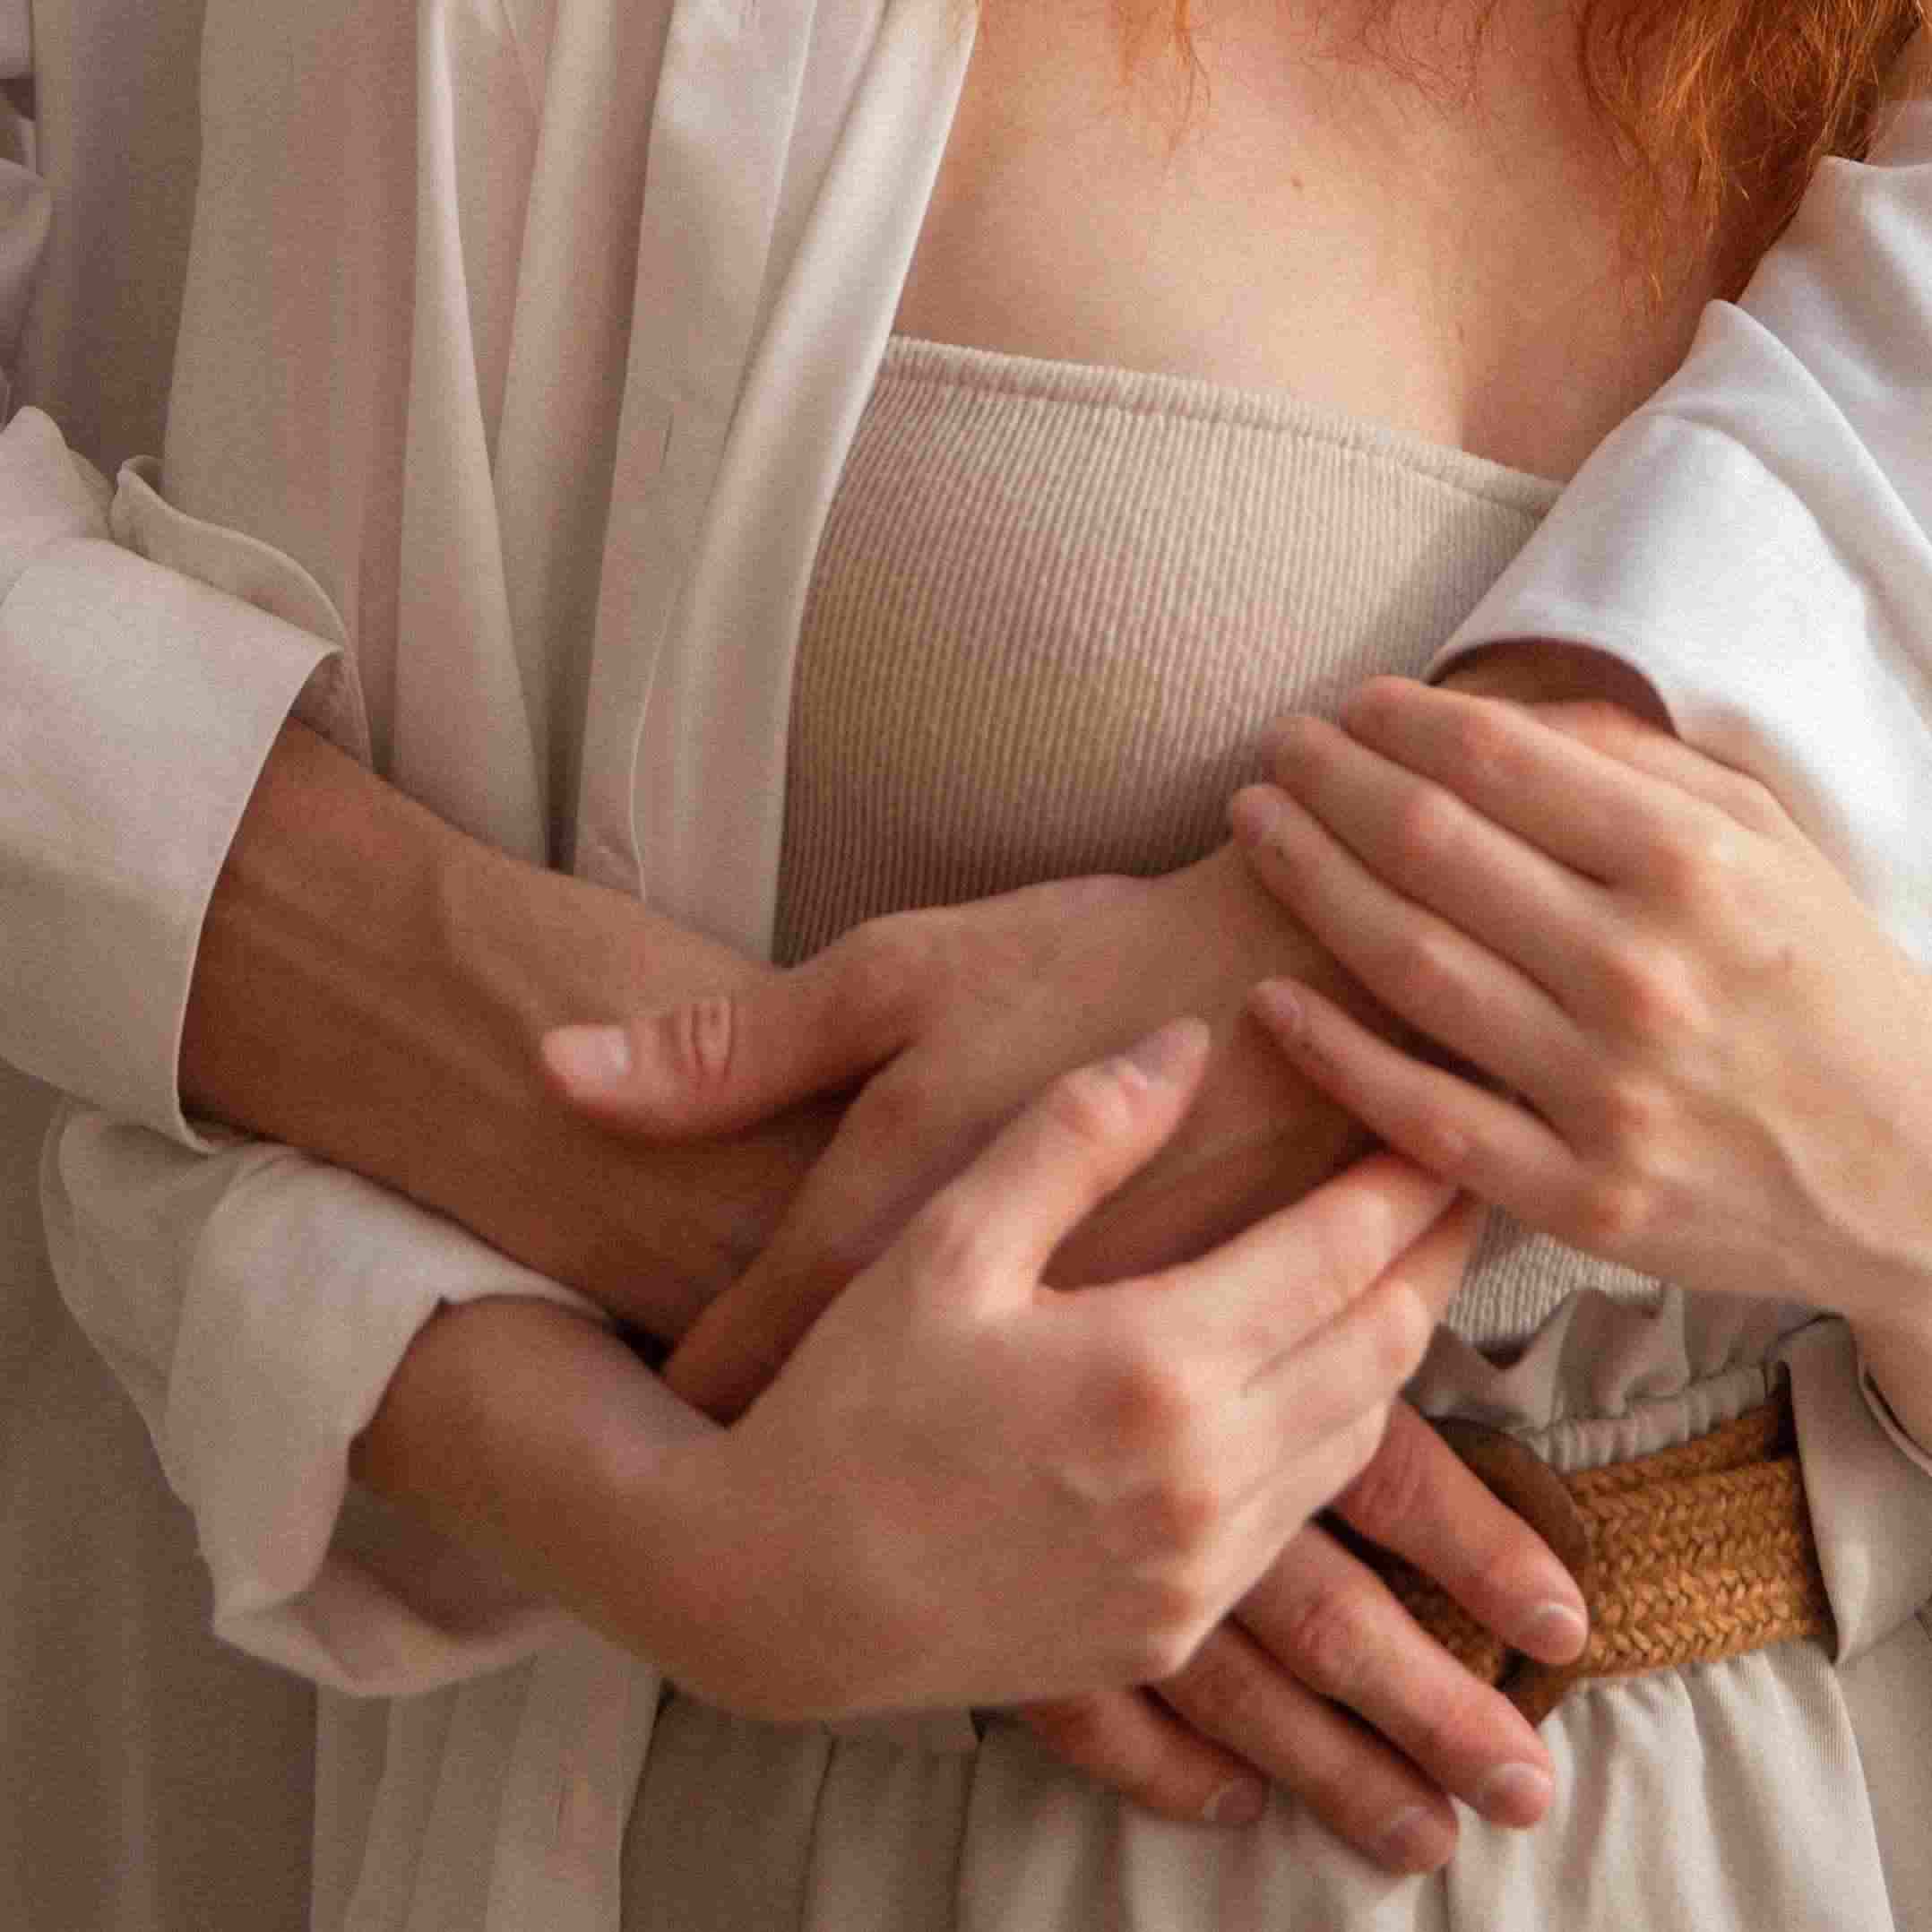 PORN BETTER Make Love not Porn Amateur Sensual Porn divers fairly produced porn feminist alternative porn empowering sex